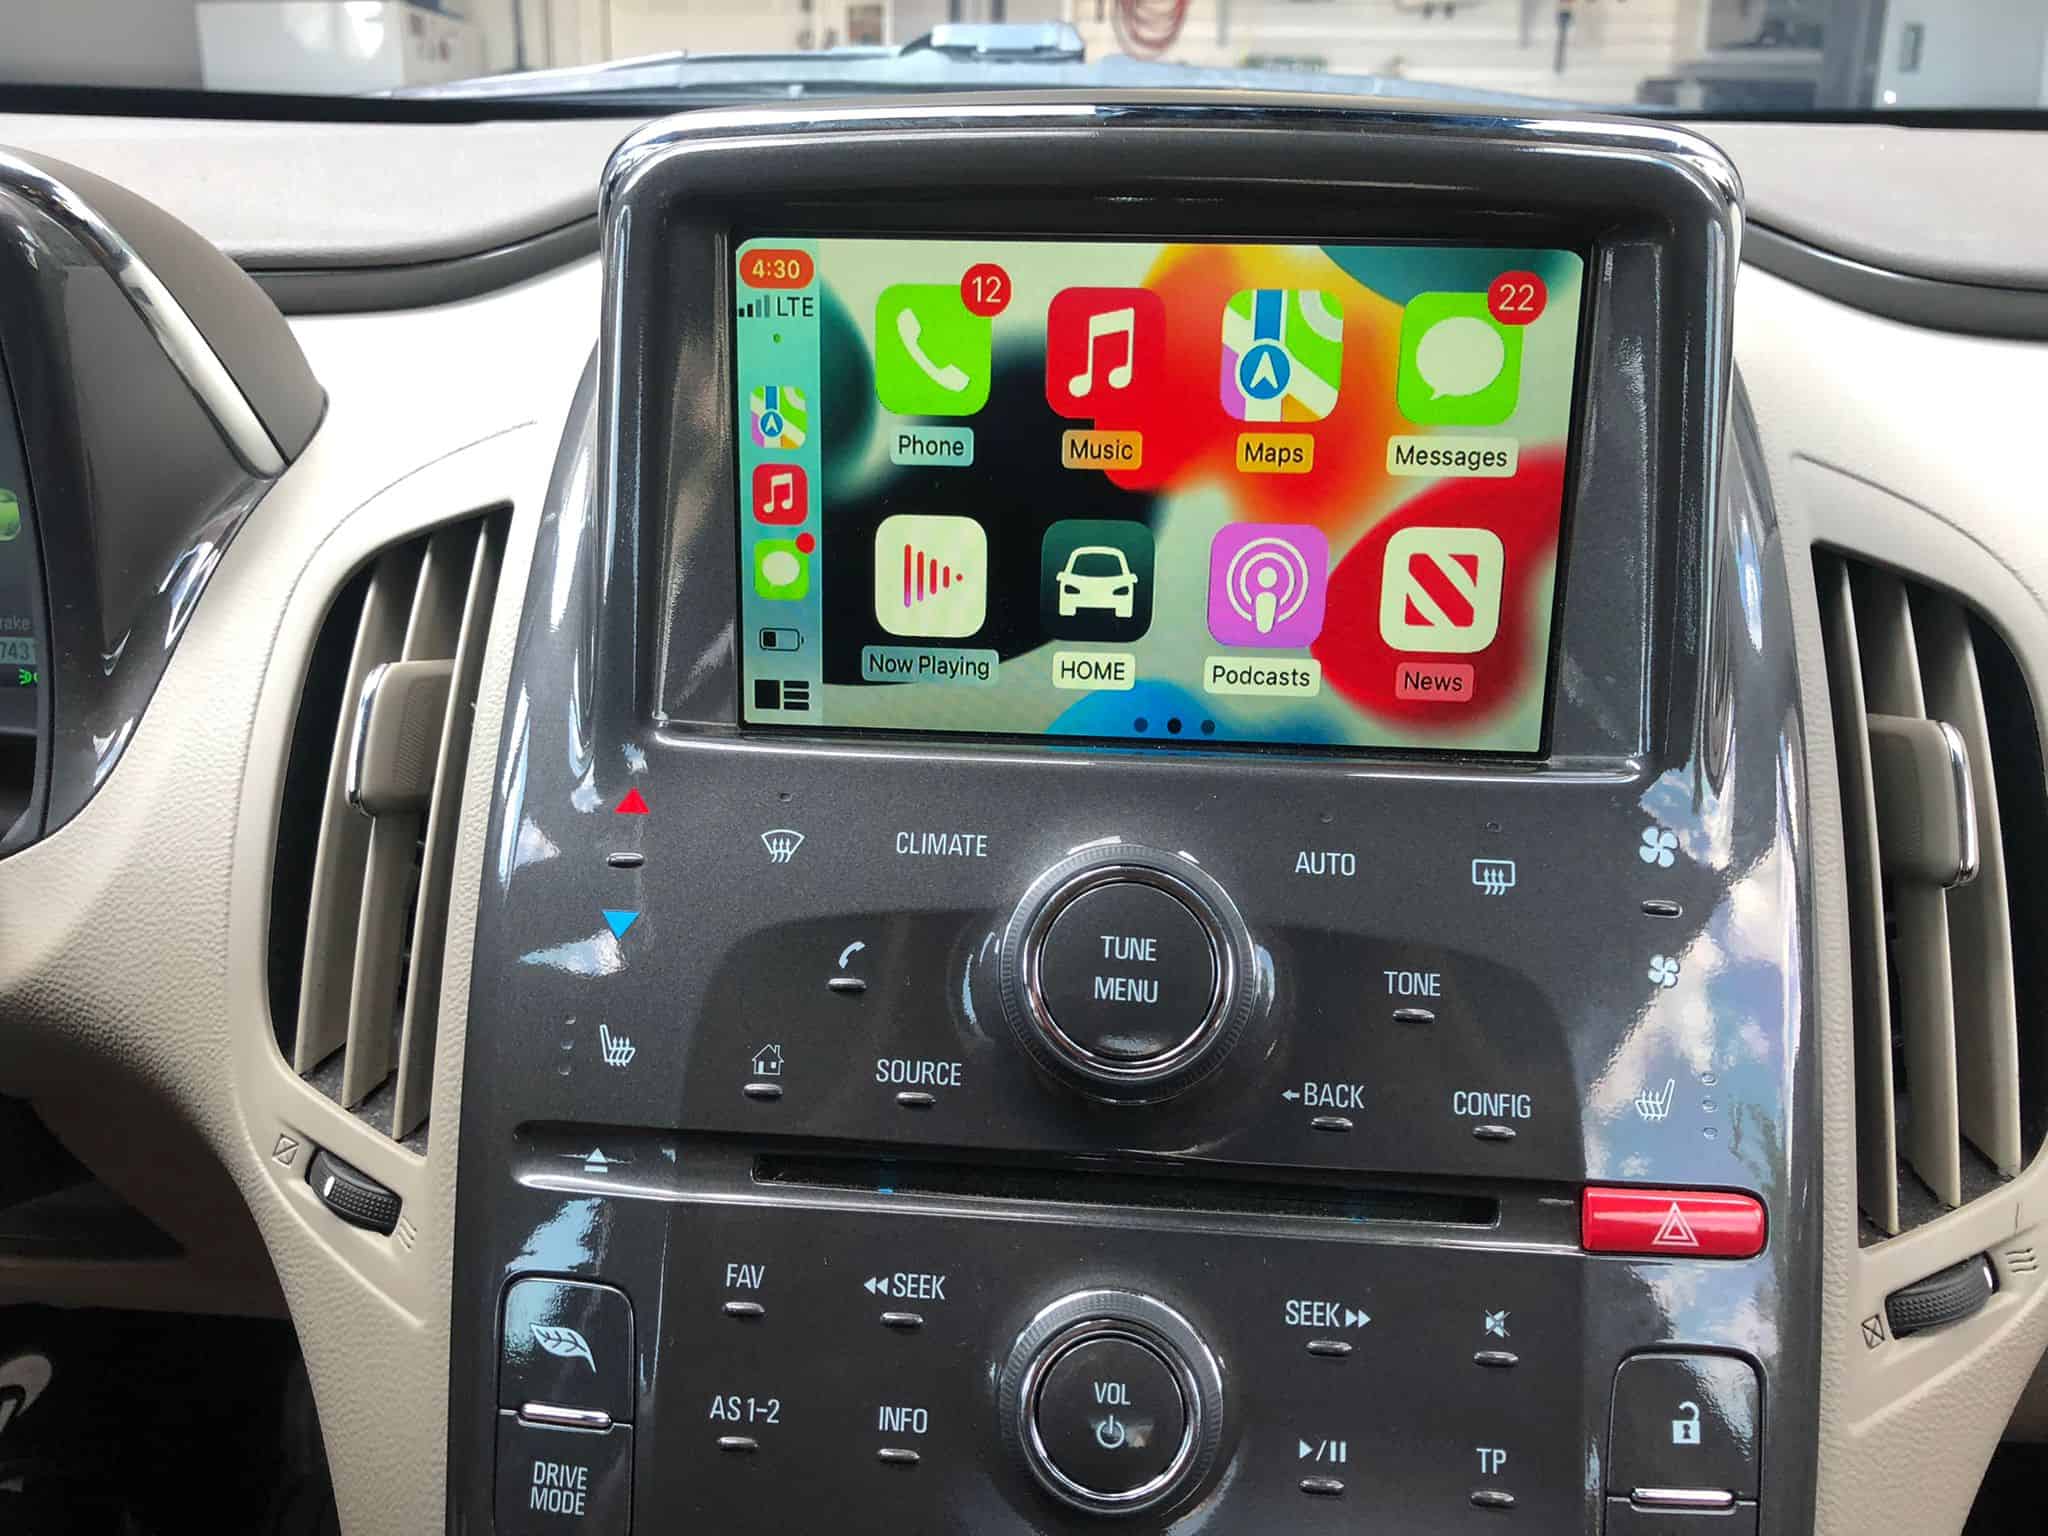 2011 - 2015 Chevy Volt CarPlay & Android Auto Upgrade